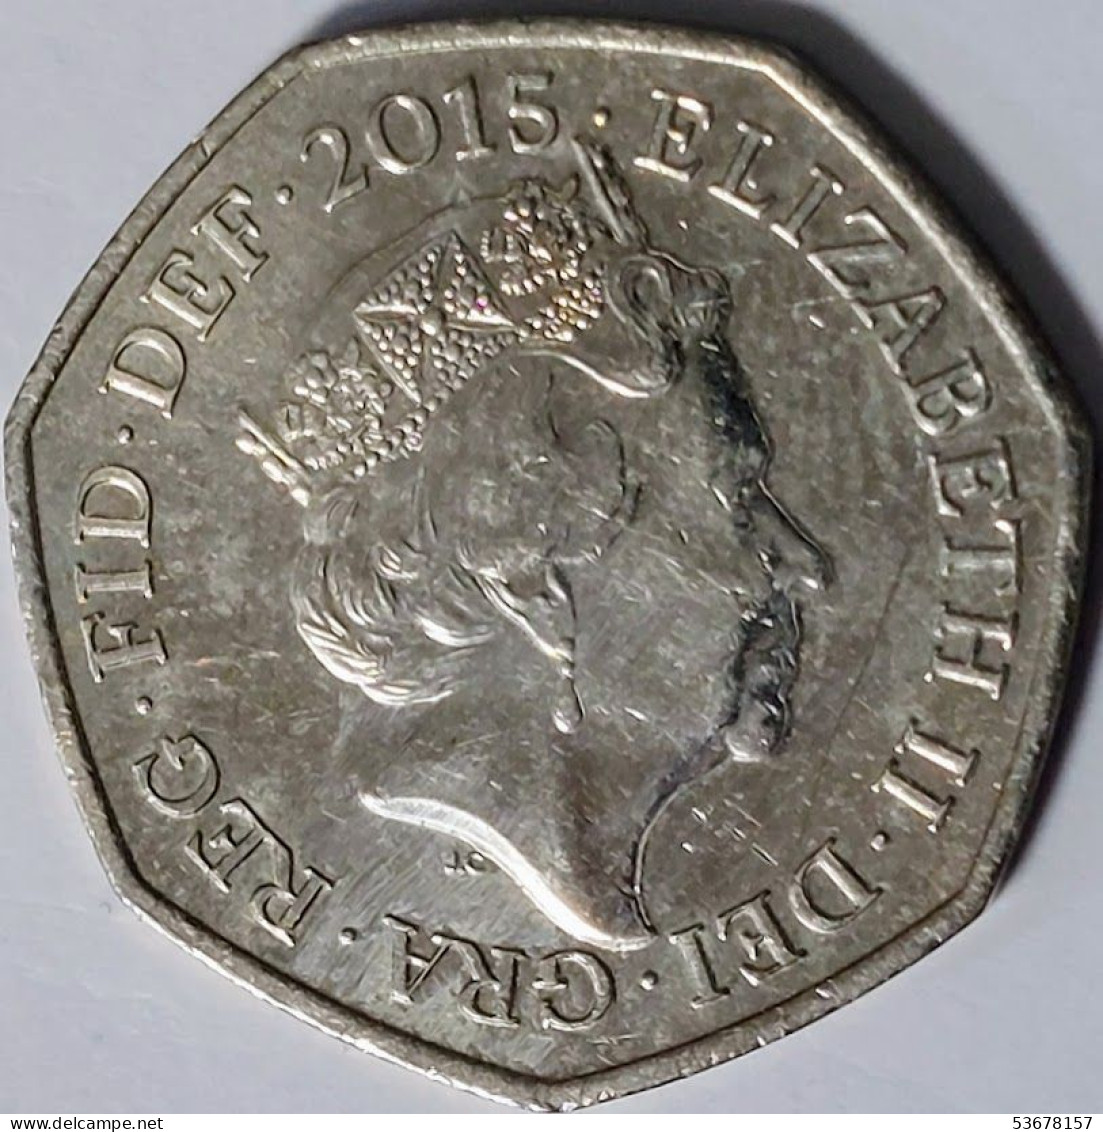 Great Britain - 50 Pence 2015, KM# 1337 (#2050) - 50 Pence